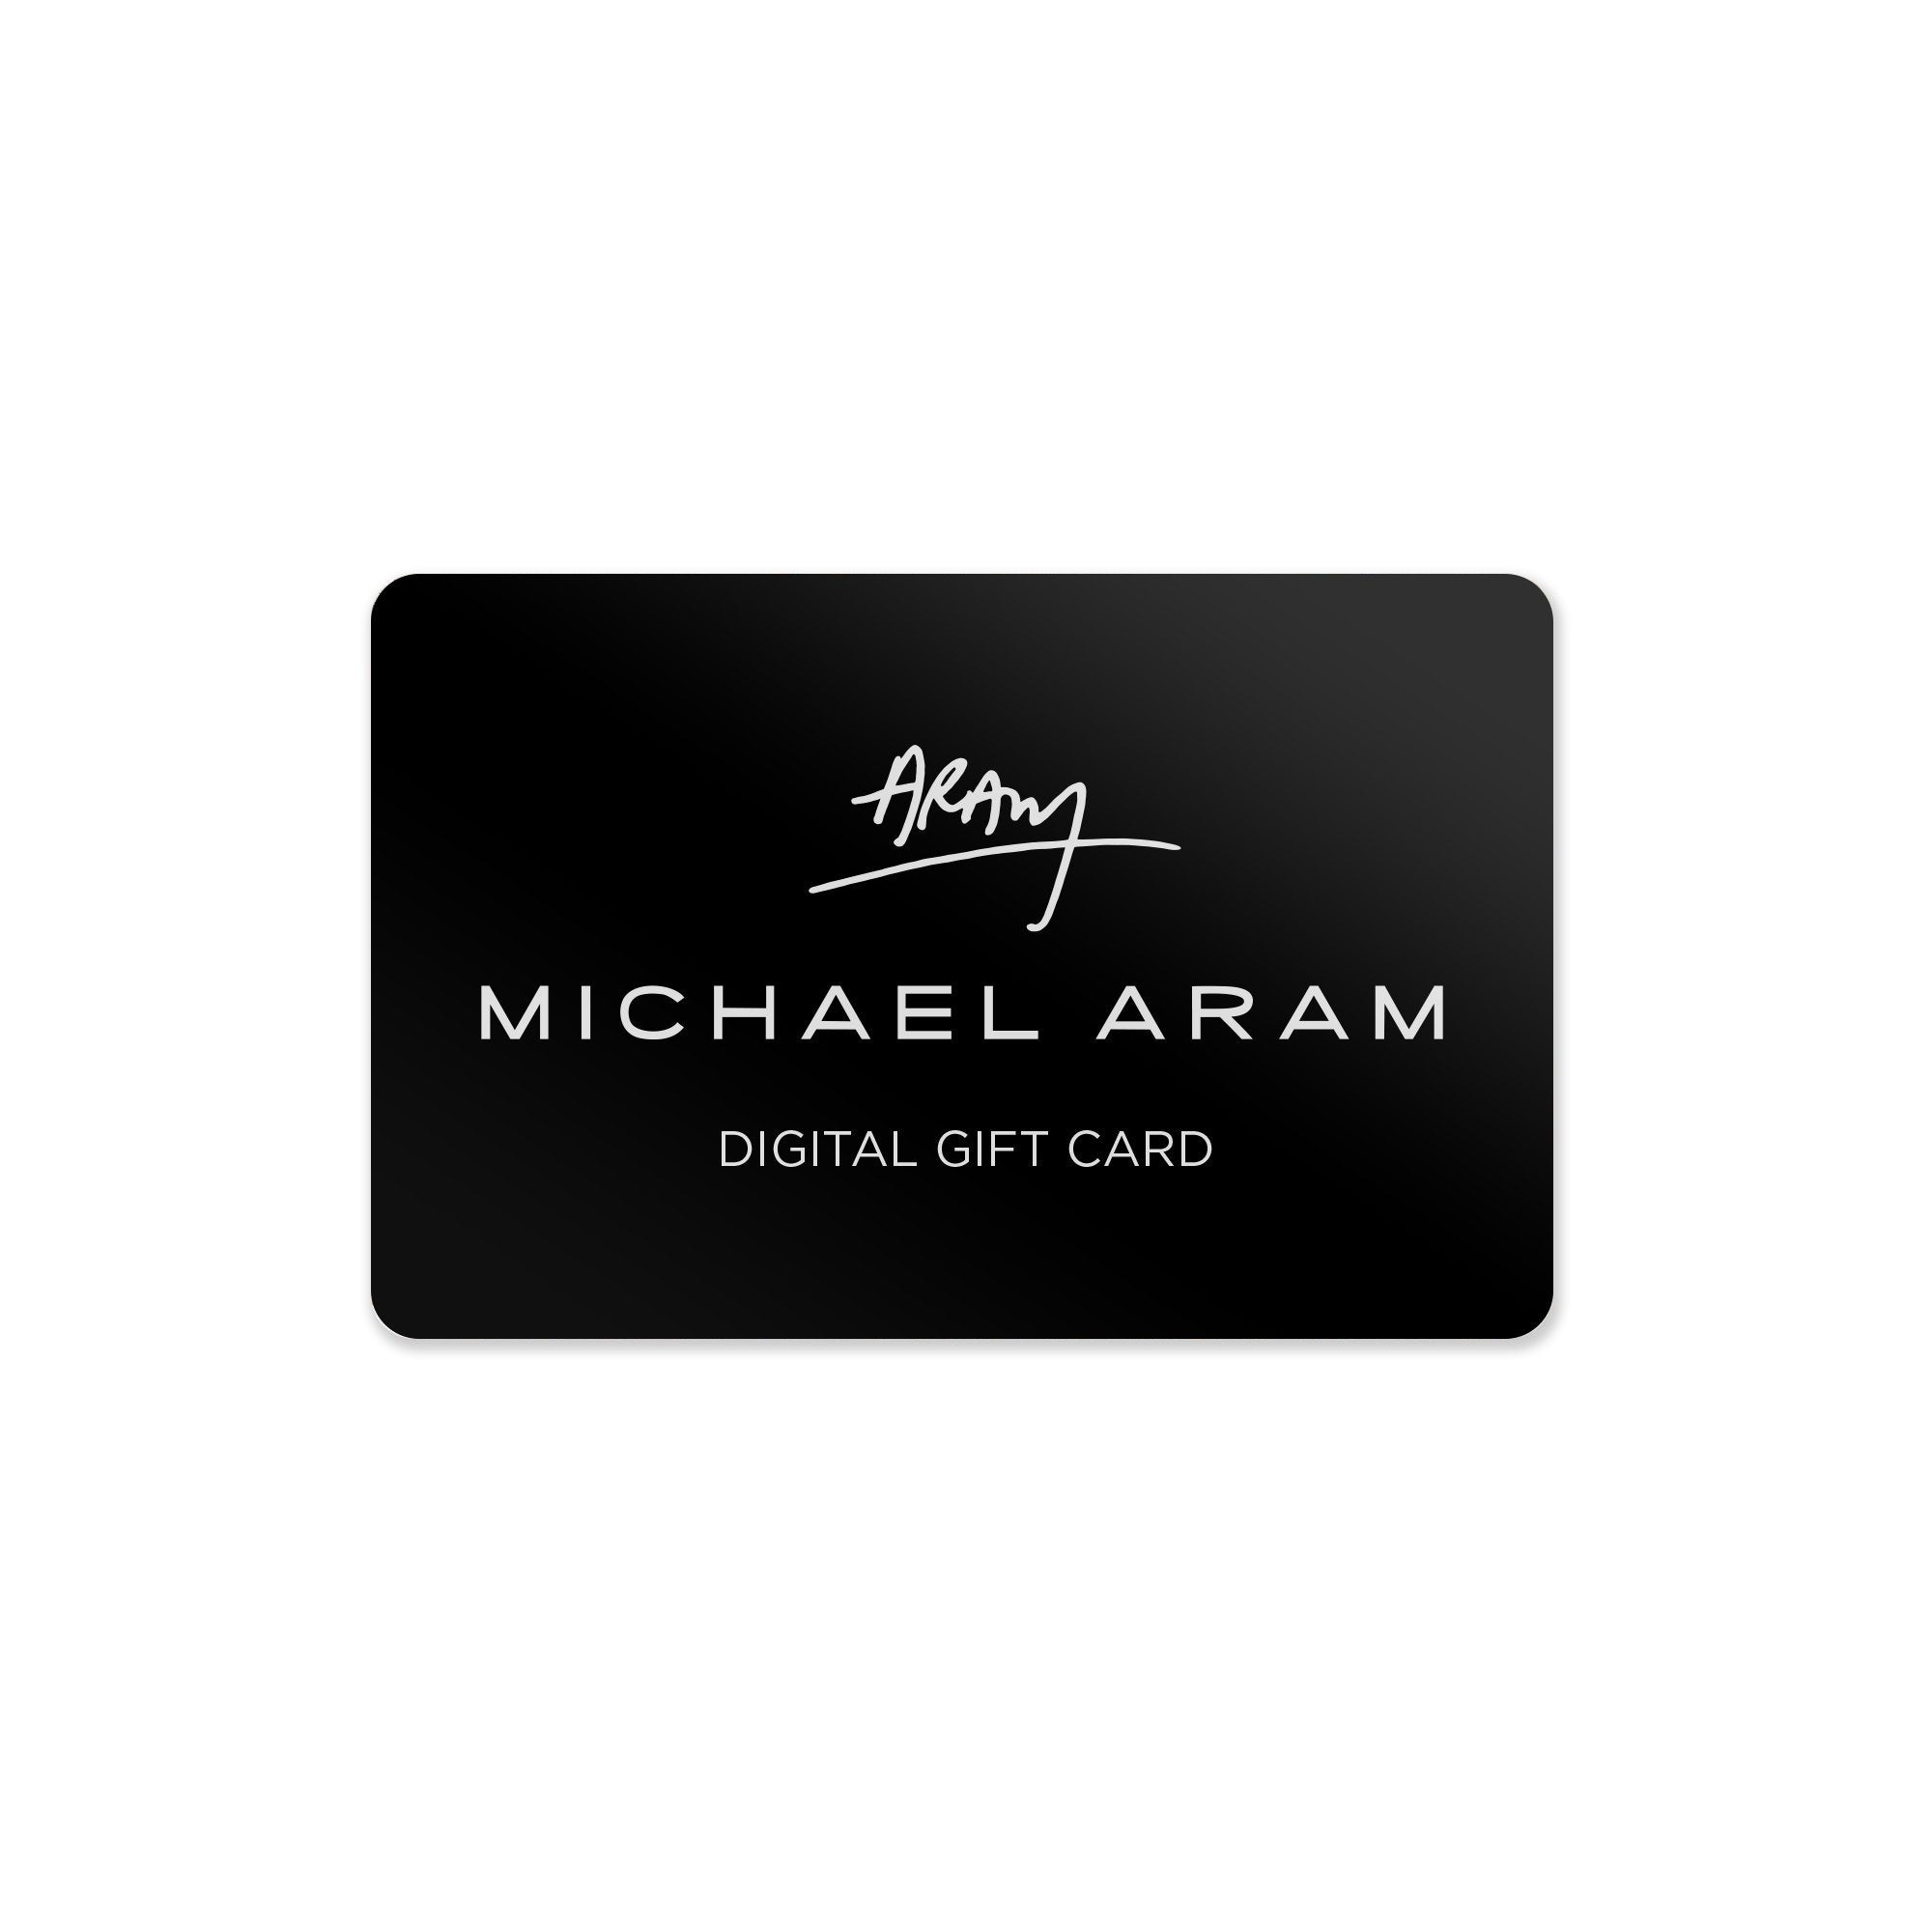 Michael Aram Digital Gift Card